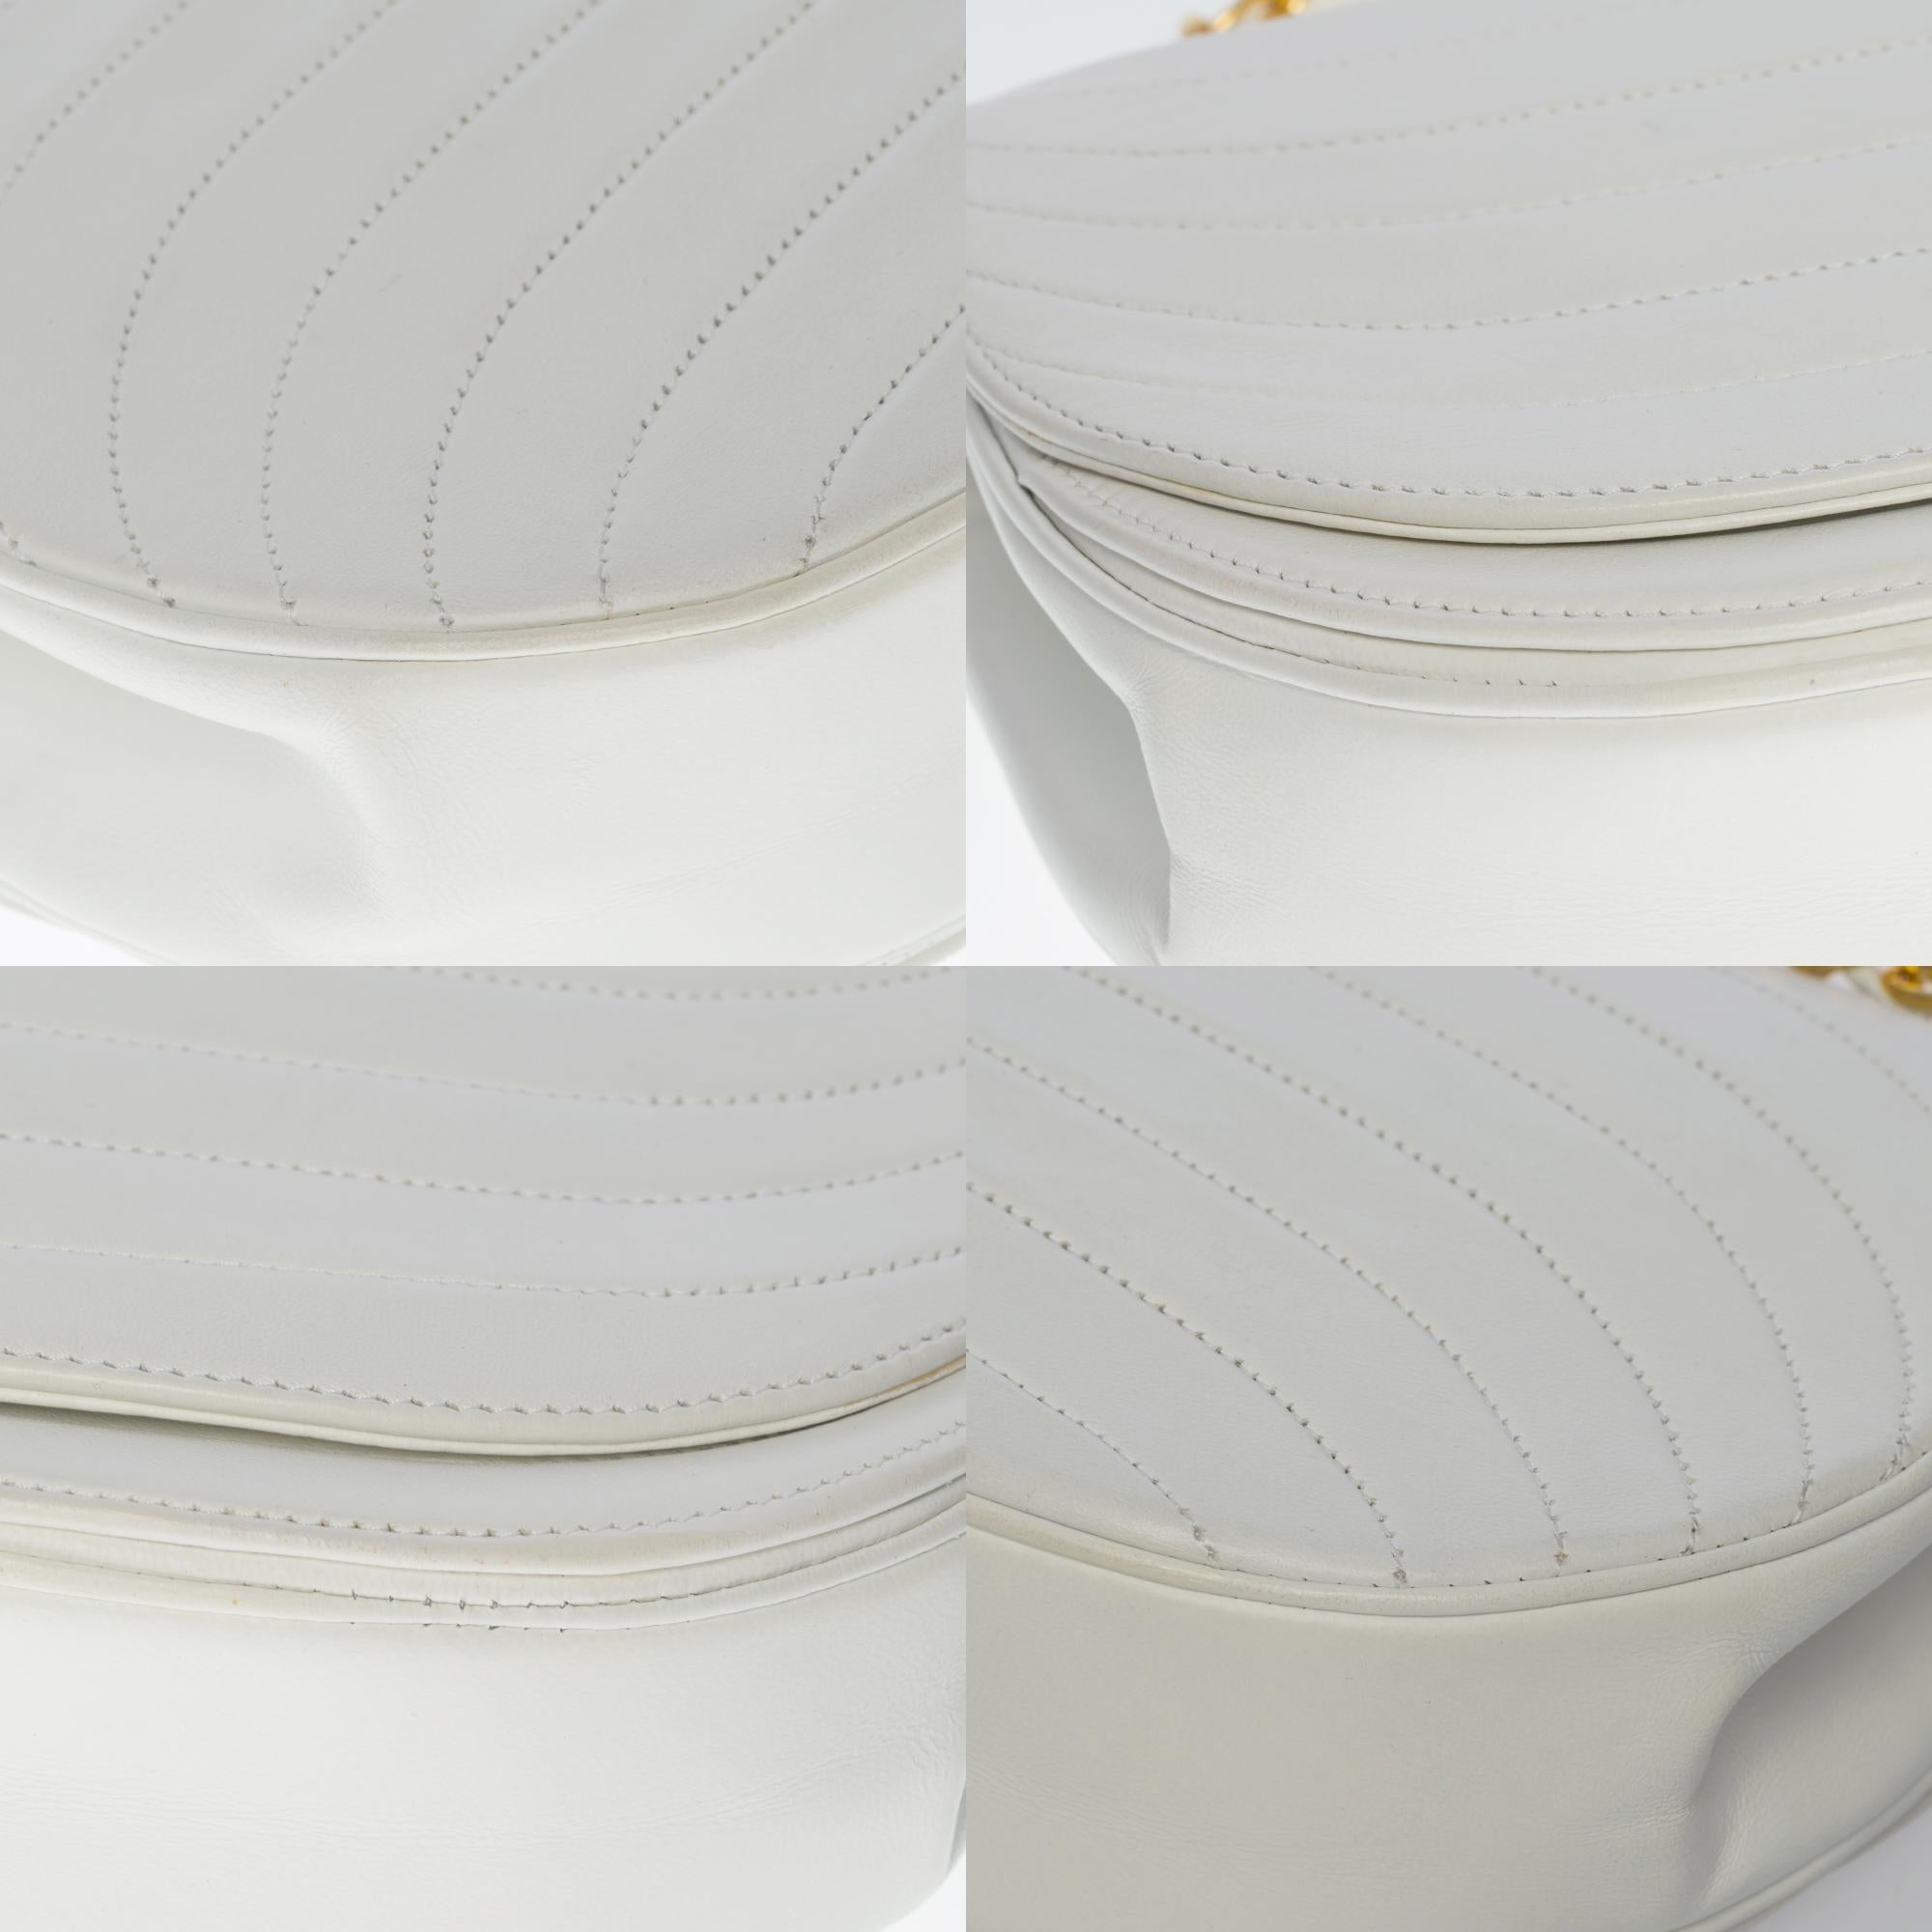 Rare Chanel Classique demi-lune shoulder bag in white lambskin, GHW 2